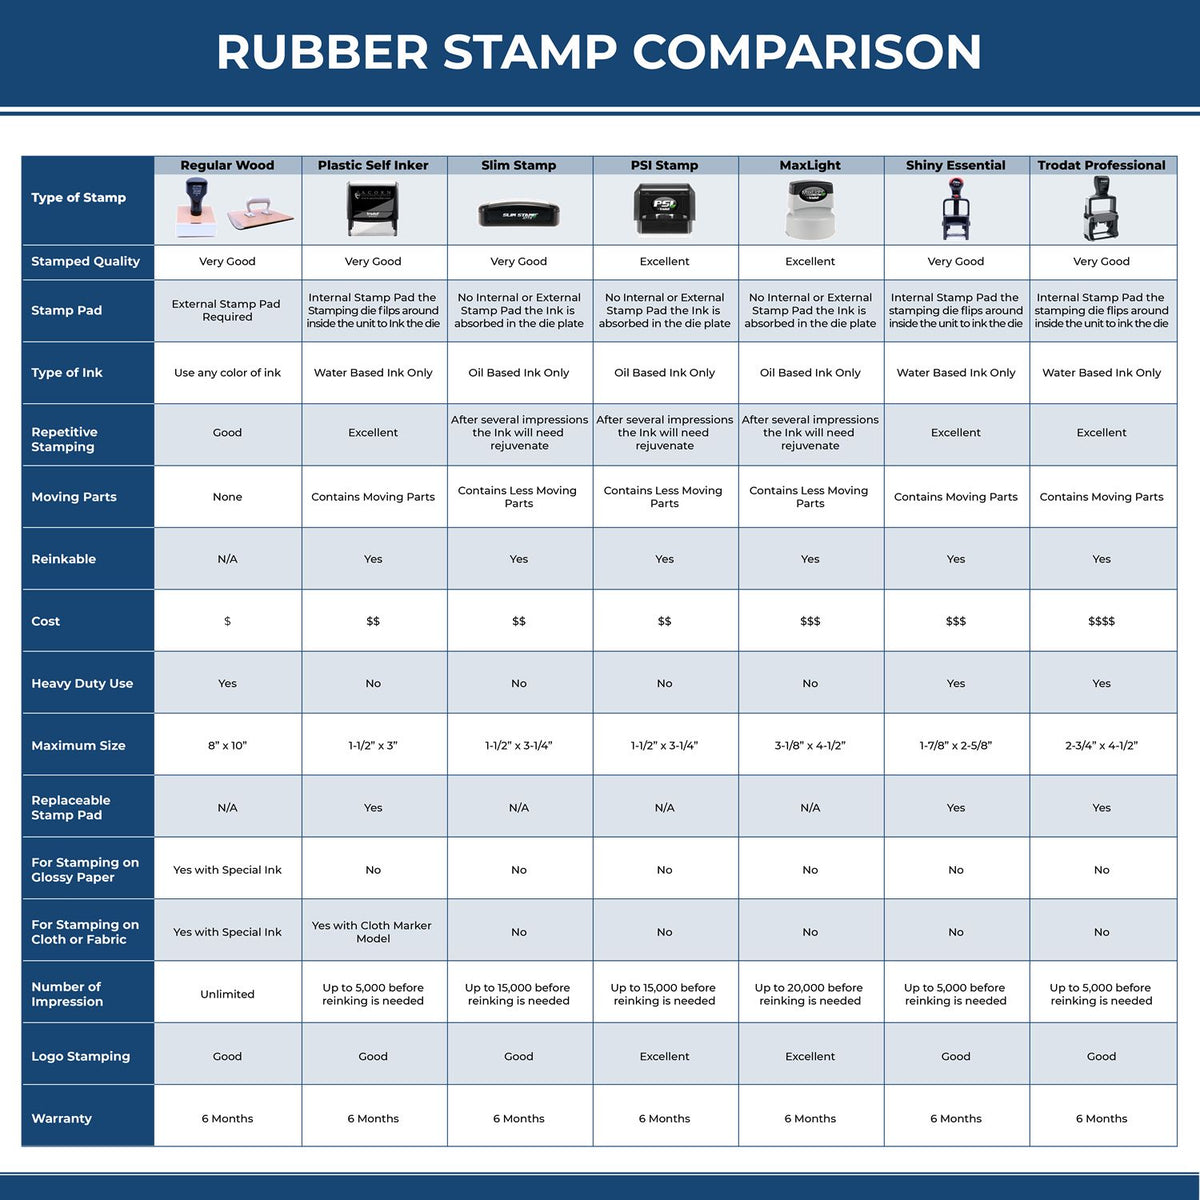 Large Parcel Post Economy Rubber Stamp 4950R Rubber Stamp Comparison